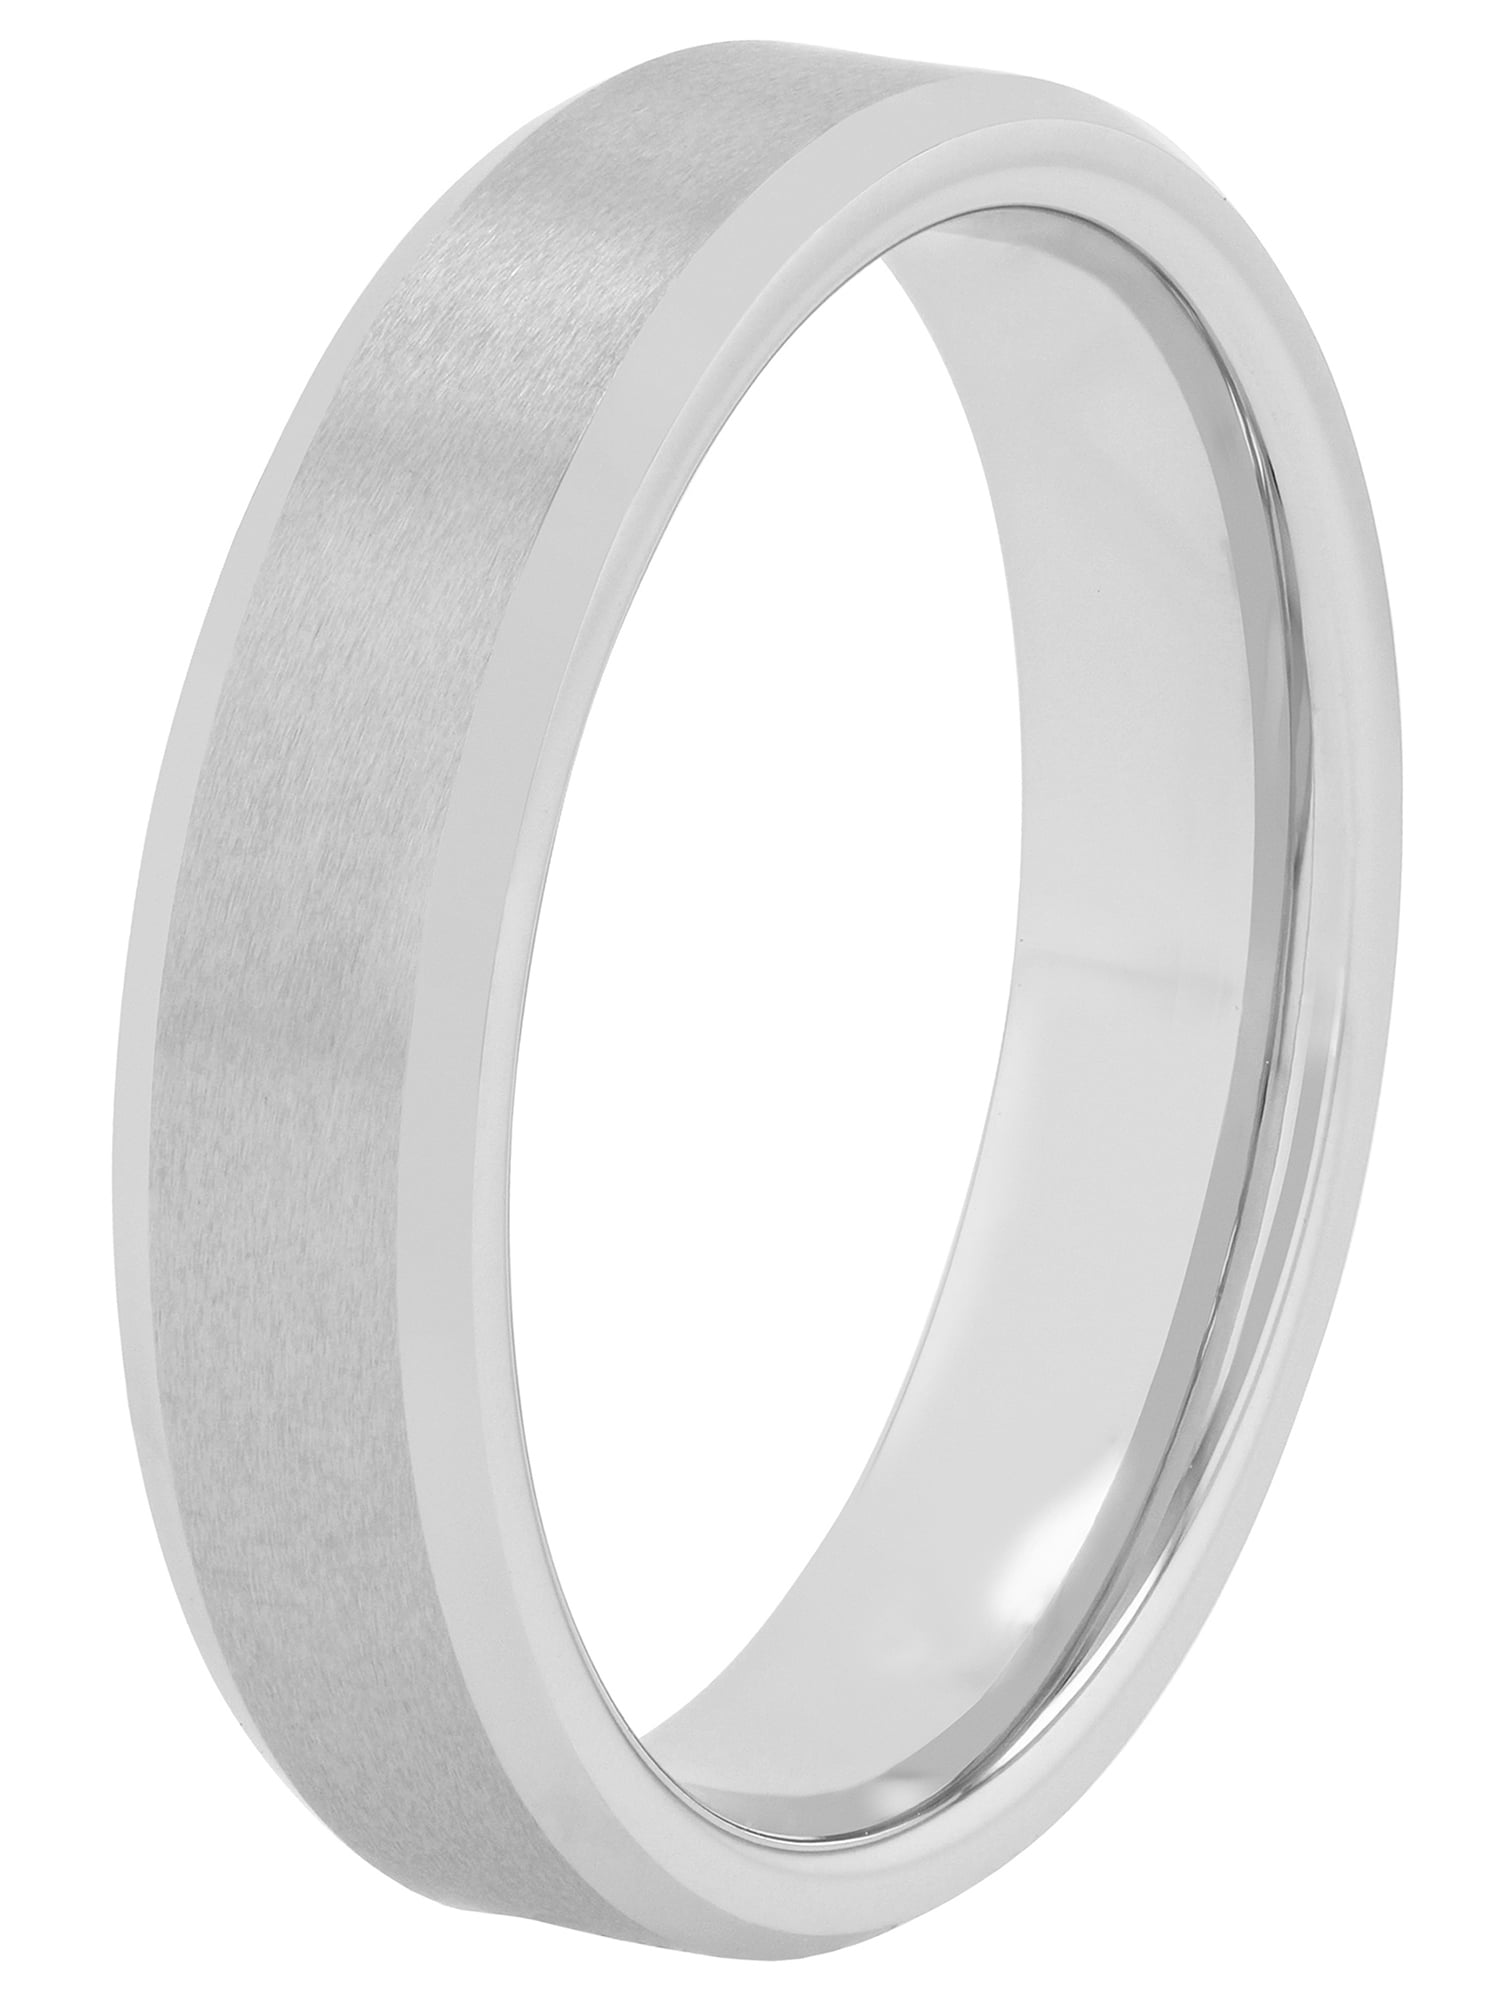 Buy Sen Enterprise White 925 Sterling Plain Silver Ring for Men and Women  (10.0) at Amazon.in